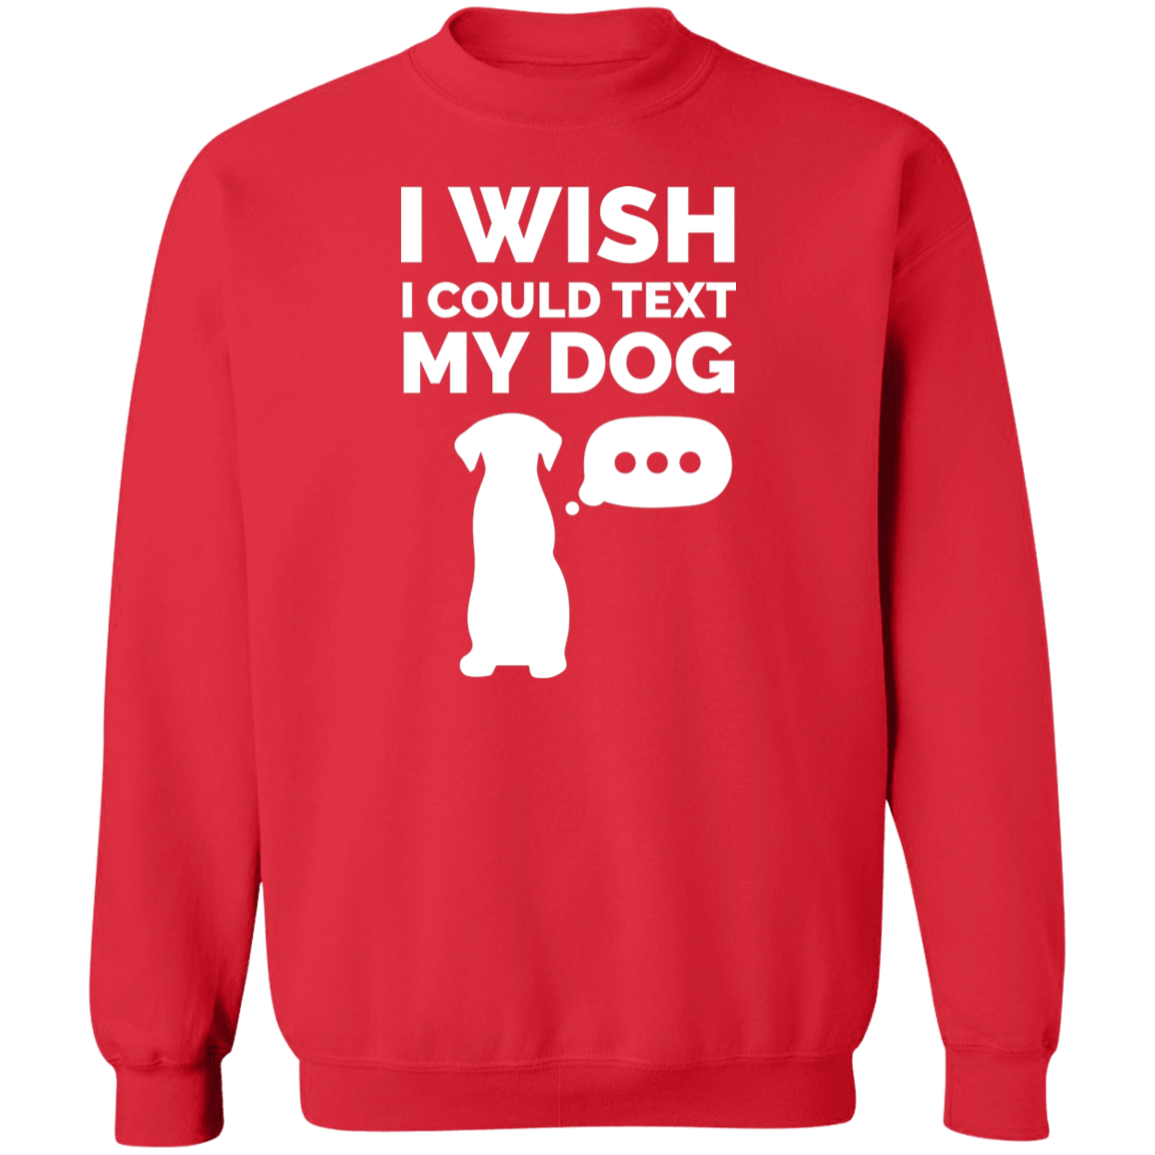 I Wish I Could Text My Dog - Sweatshirt.